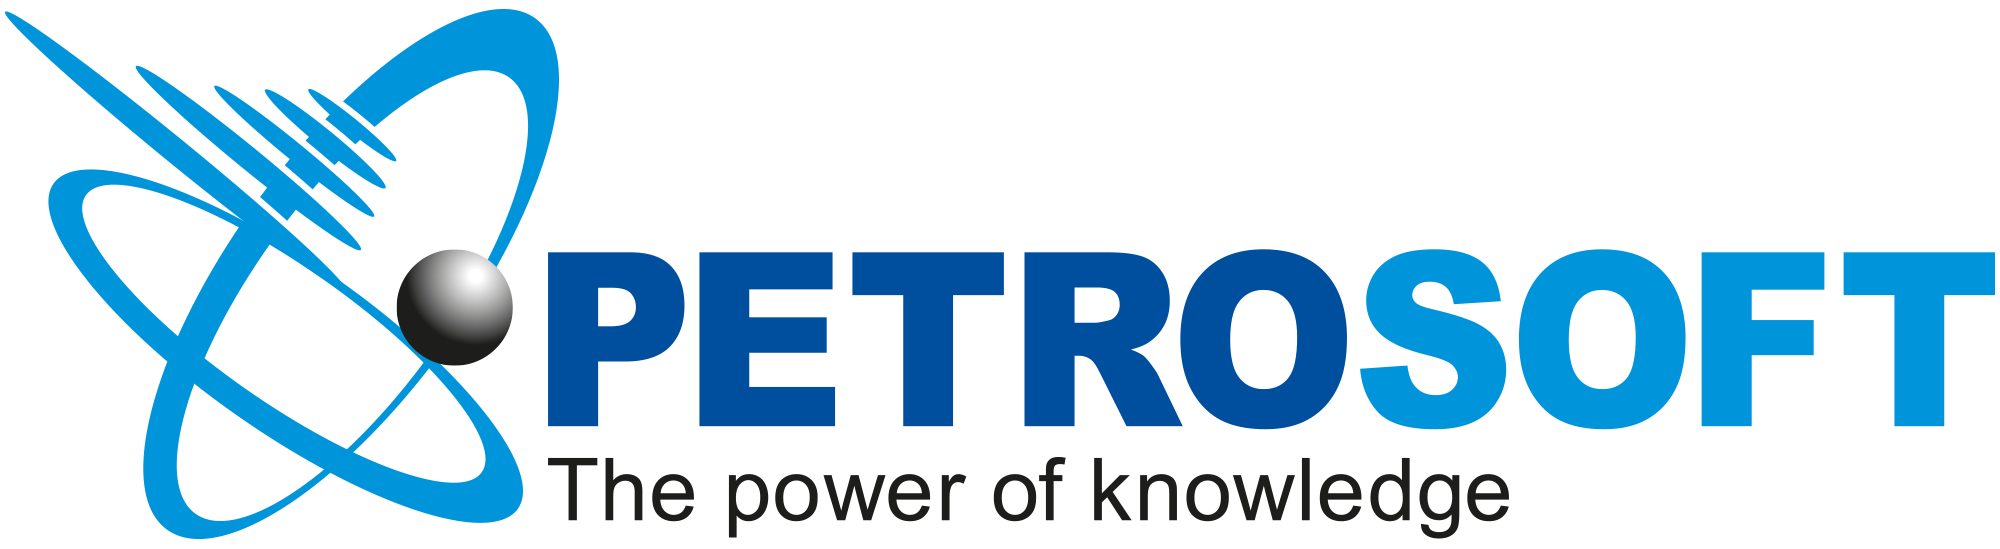 marketing for ecommerce Petrosoft Logo 2 color 1